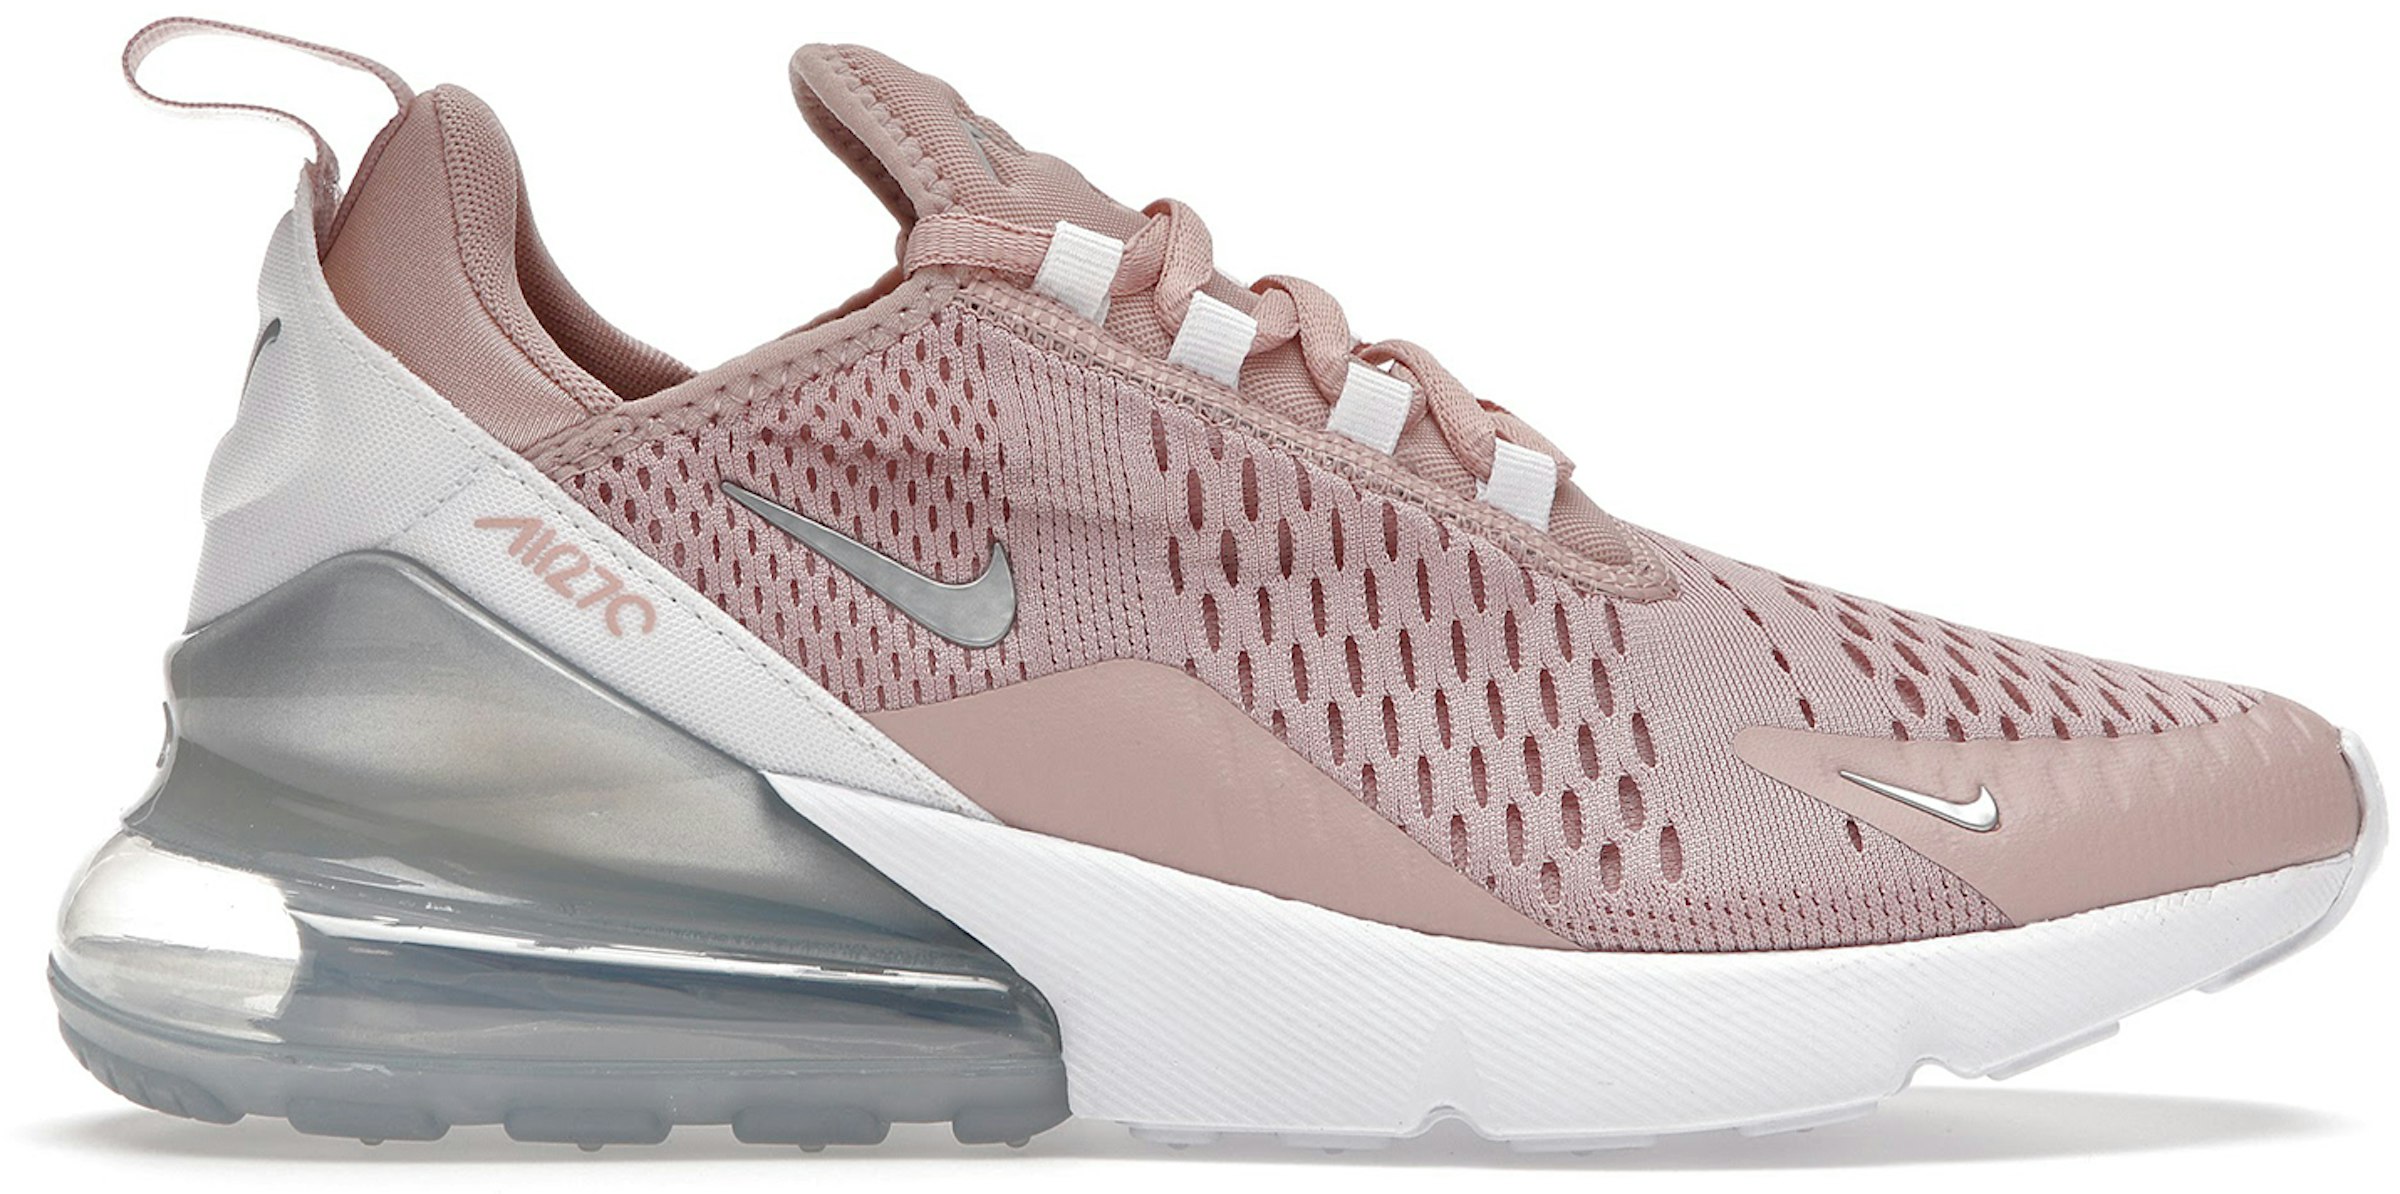 Nike Air Max Pink Oxford (Women's) - DM8326-600 - US